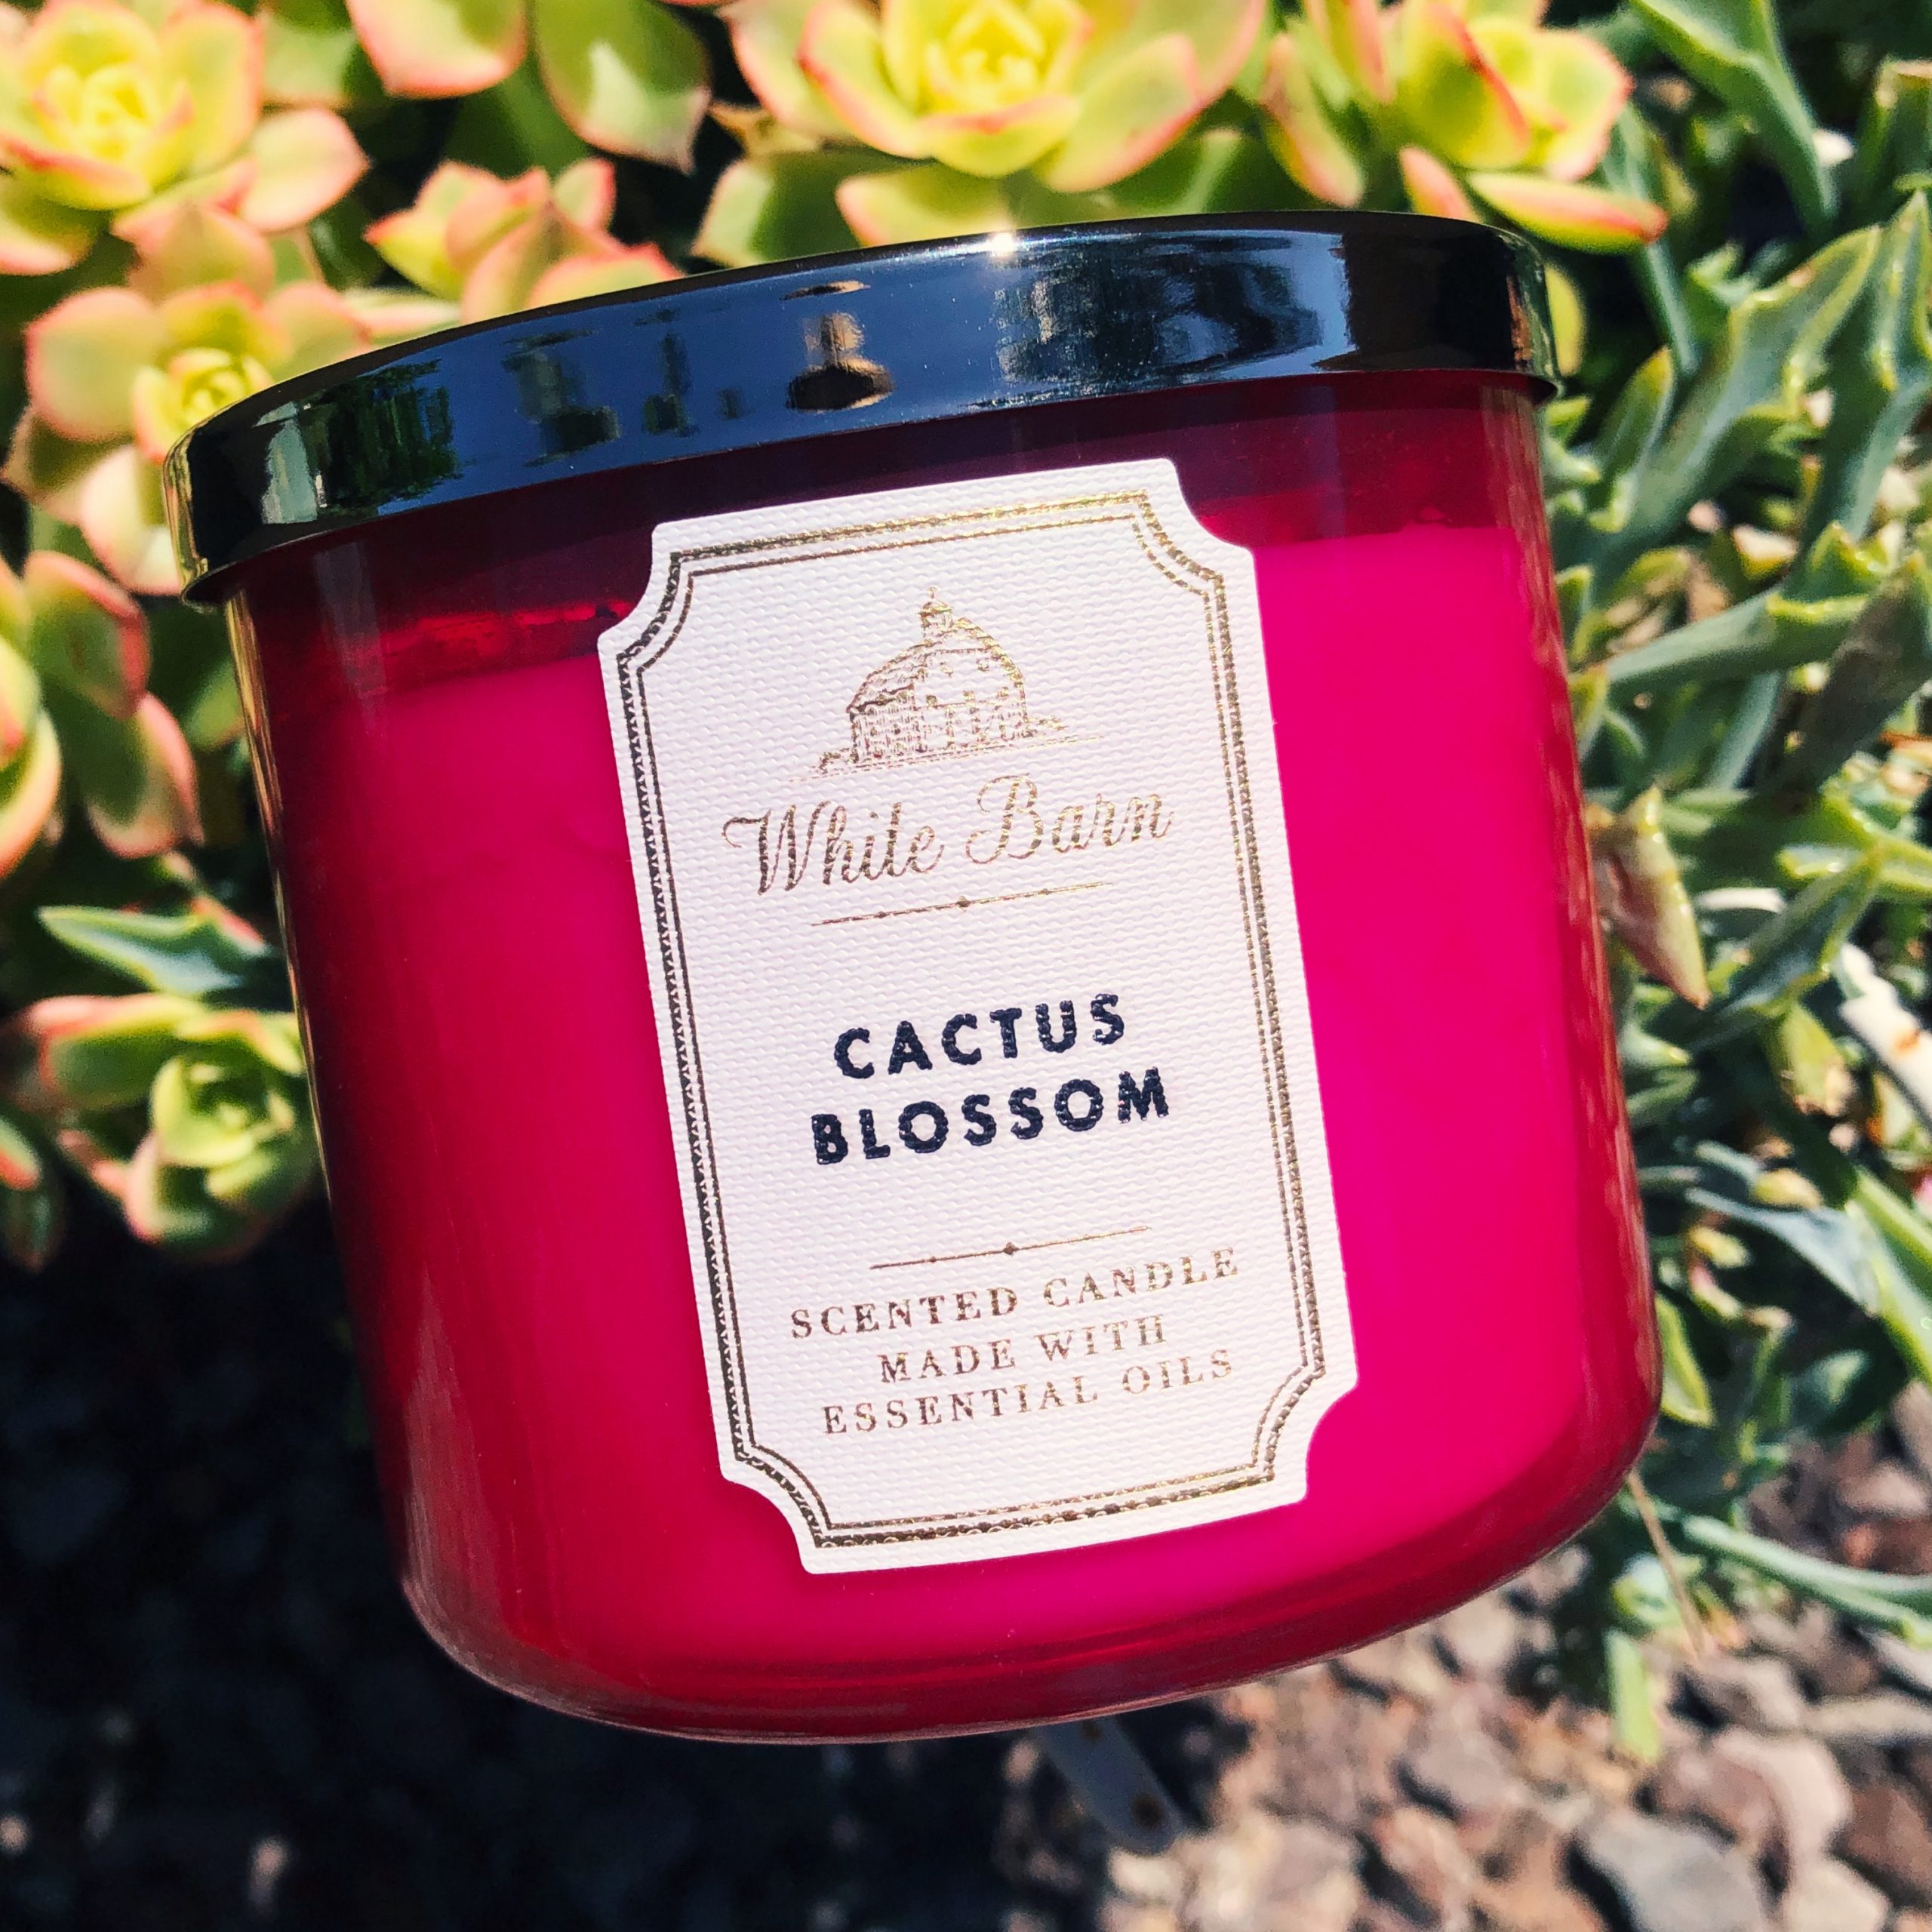 Cactus Blossom by Bath & Body Works